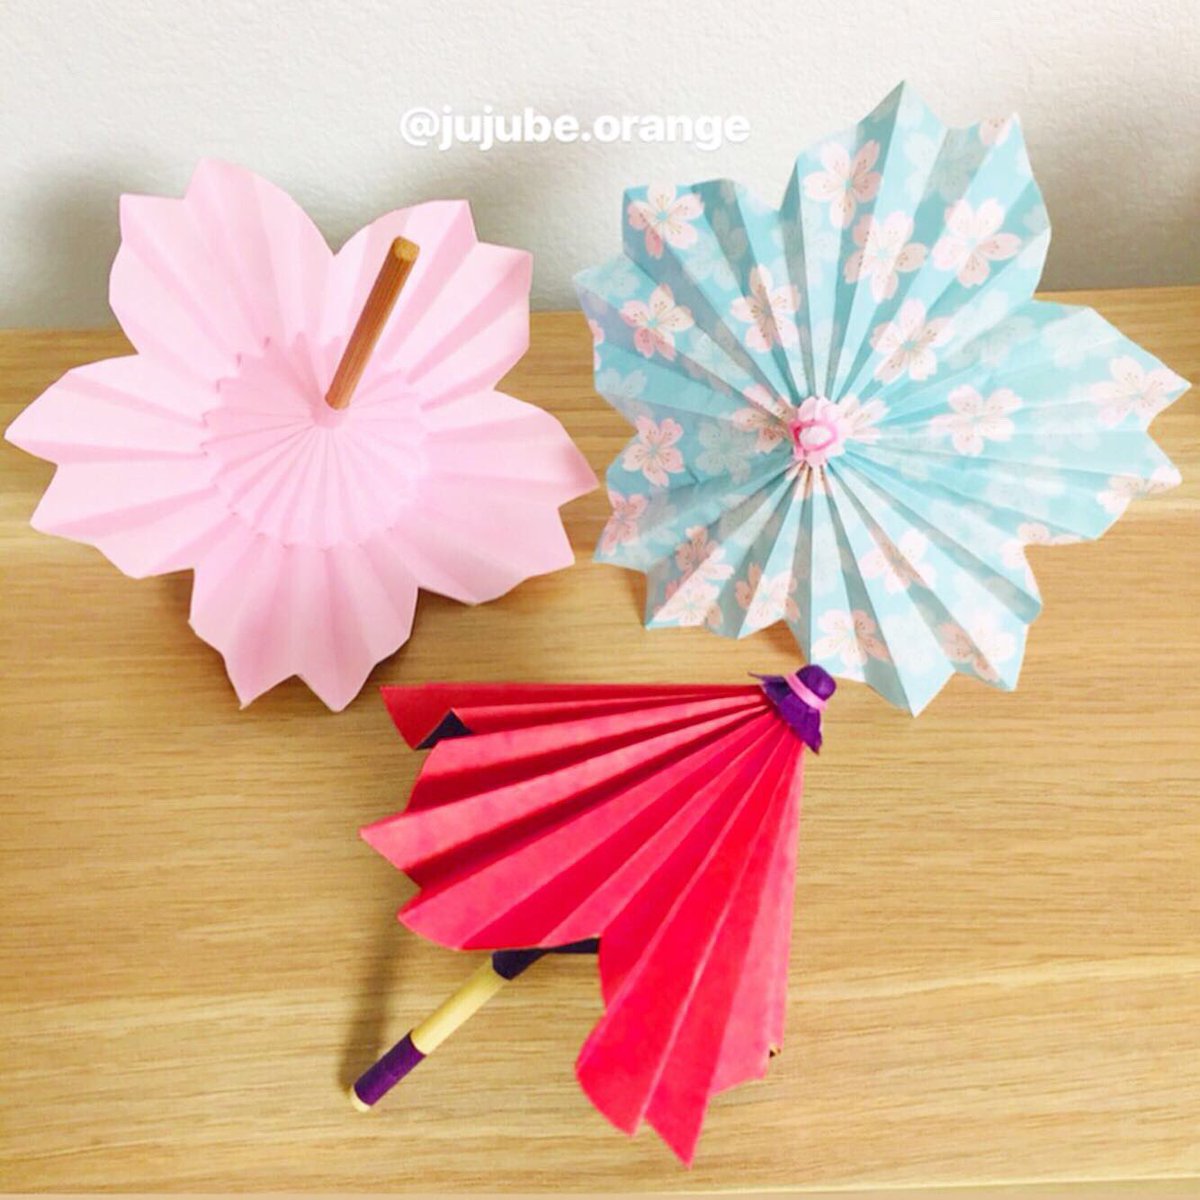 Jujube Orange 折り紙で作った 桜和傘 3つ完成しました 番傘のアレンジなので開閉可能です